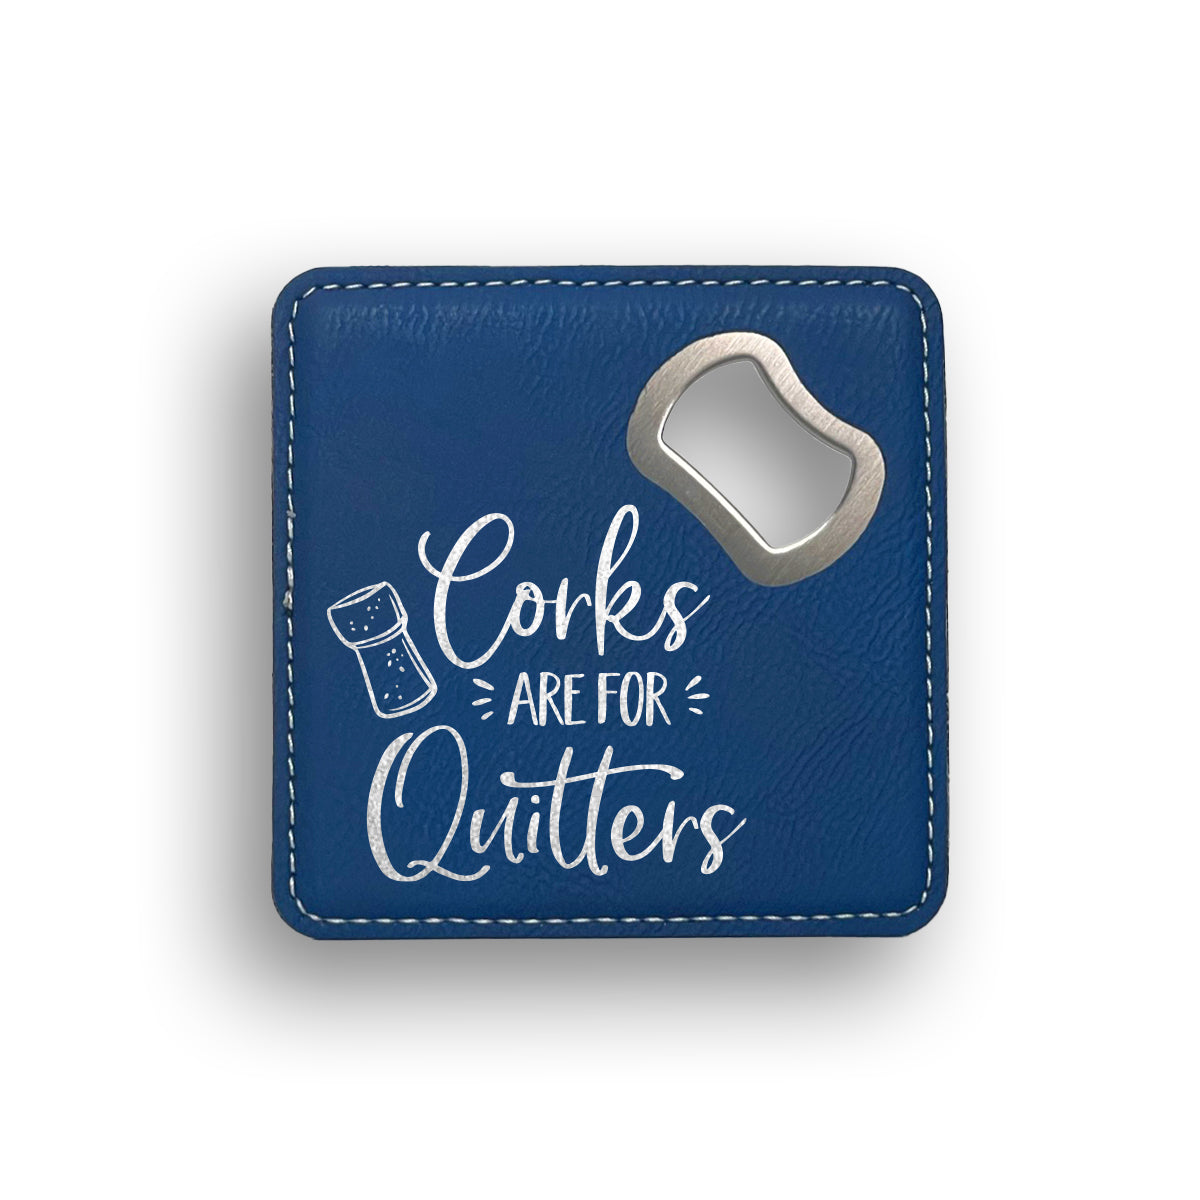 Corks Are For Bottle Opener Coaster